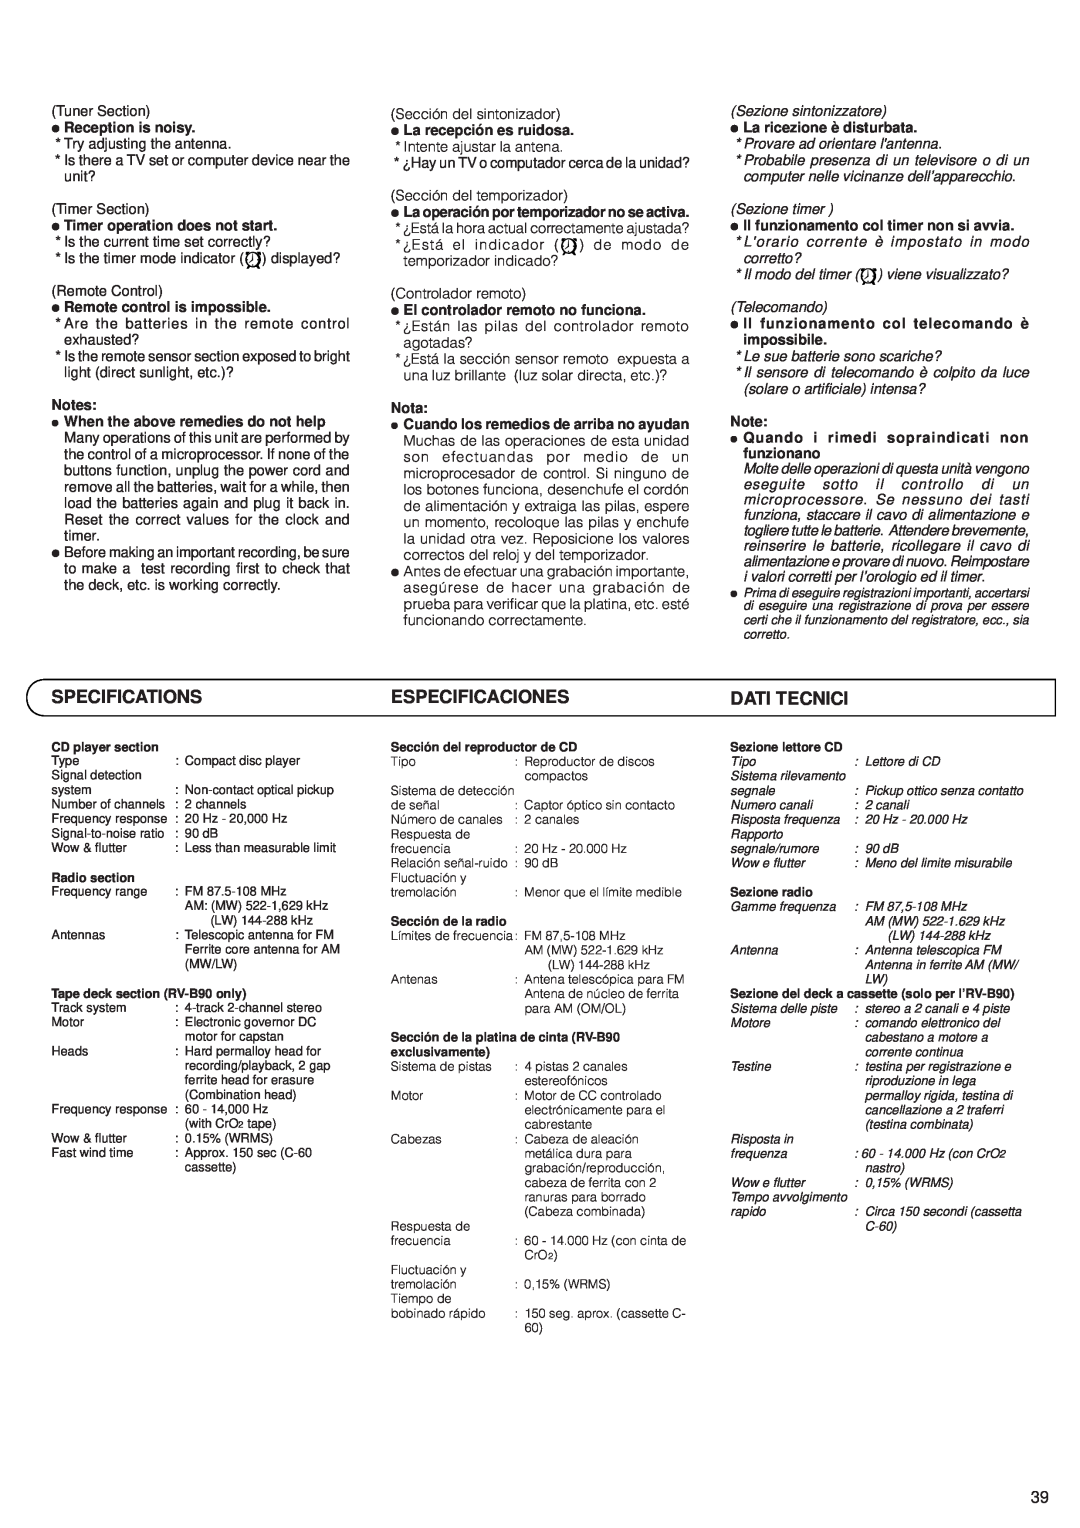 JVC RV-B90, RV-B70 manual Specifications, Especificaciones 